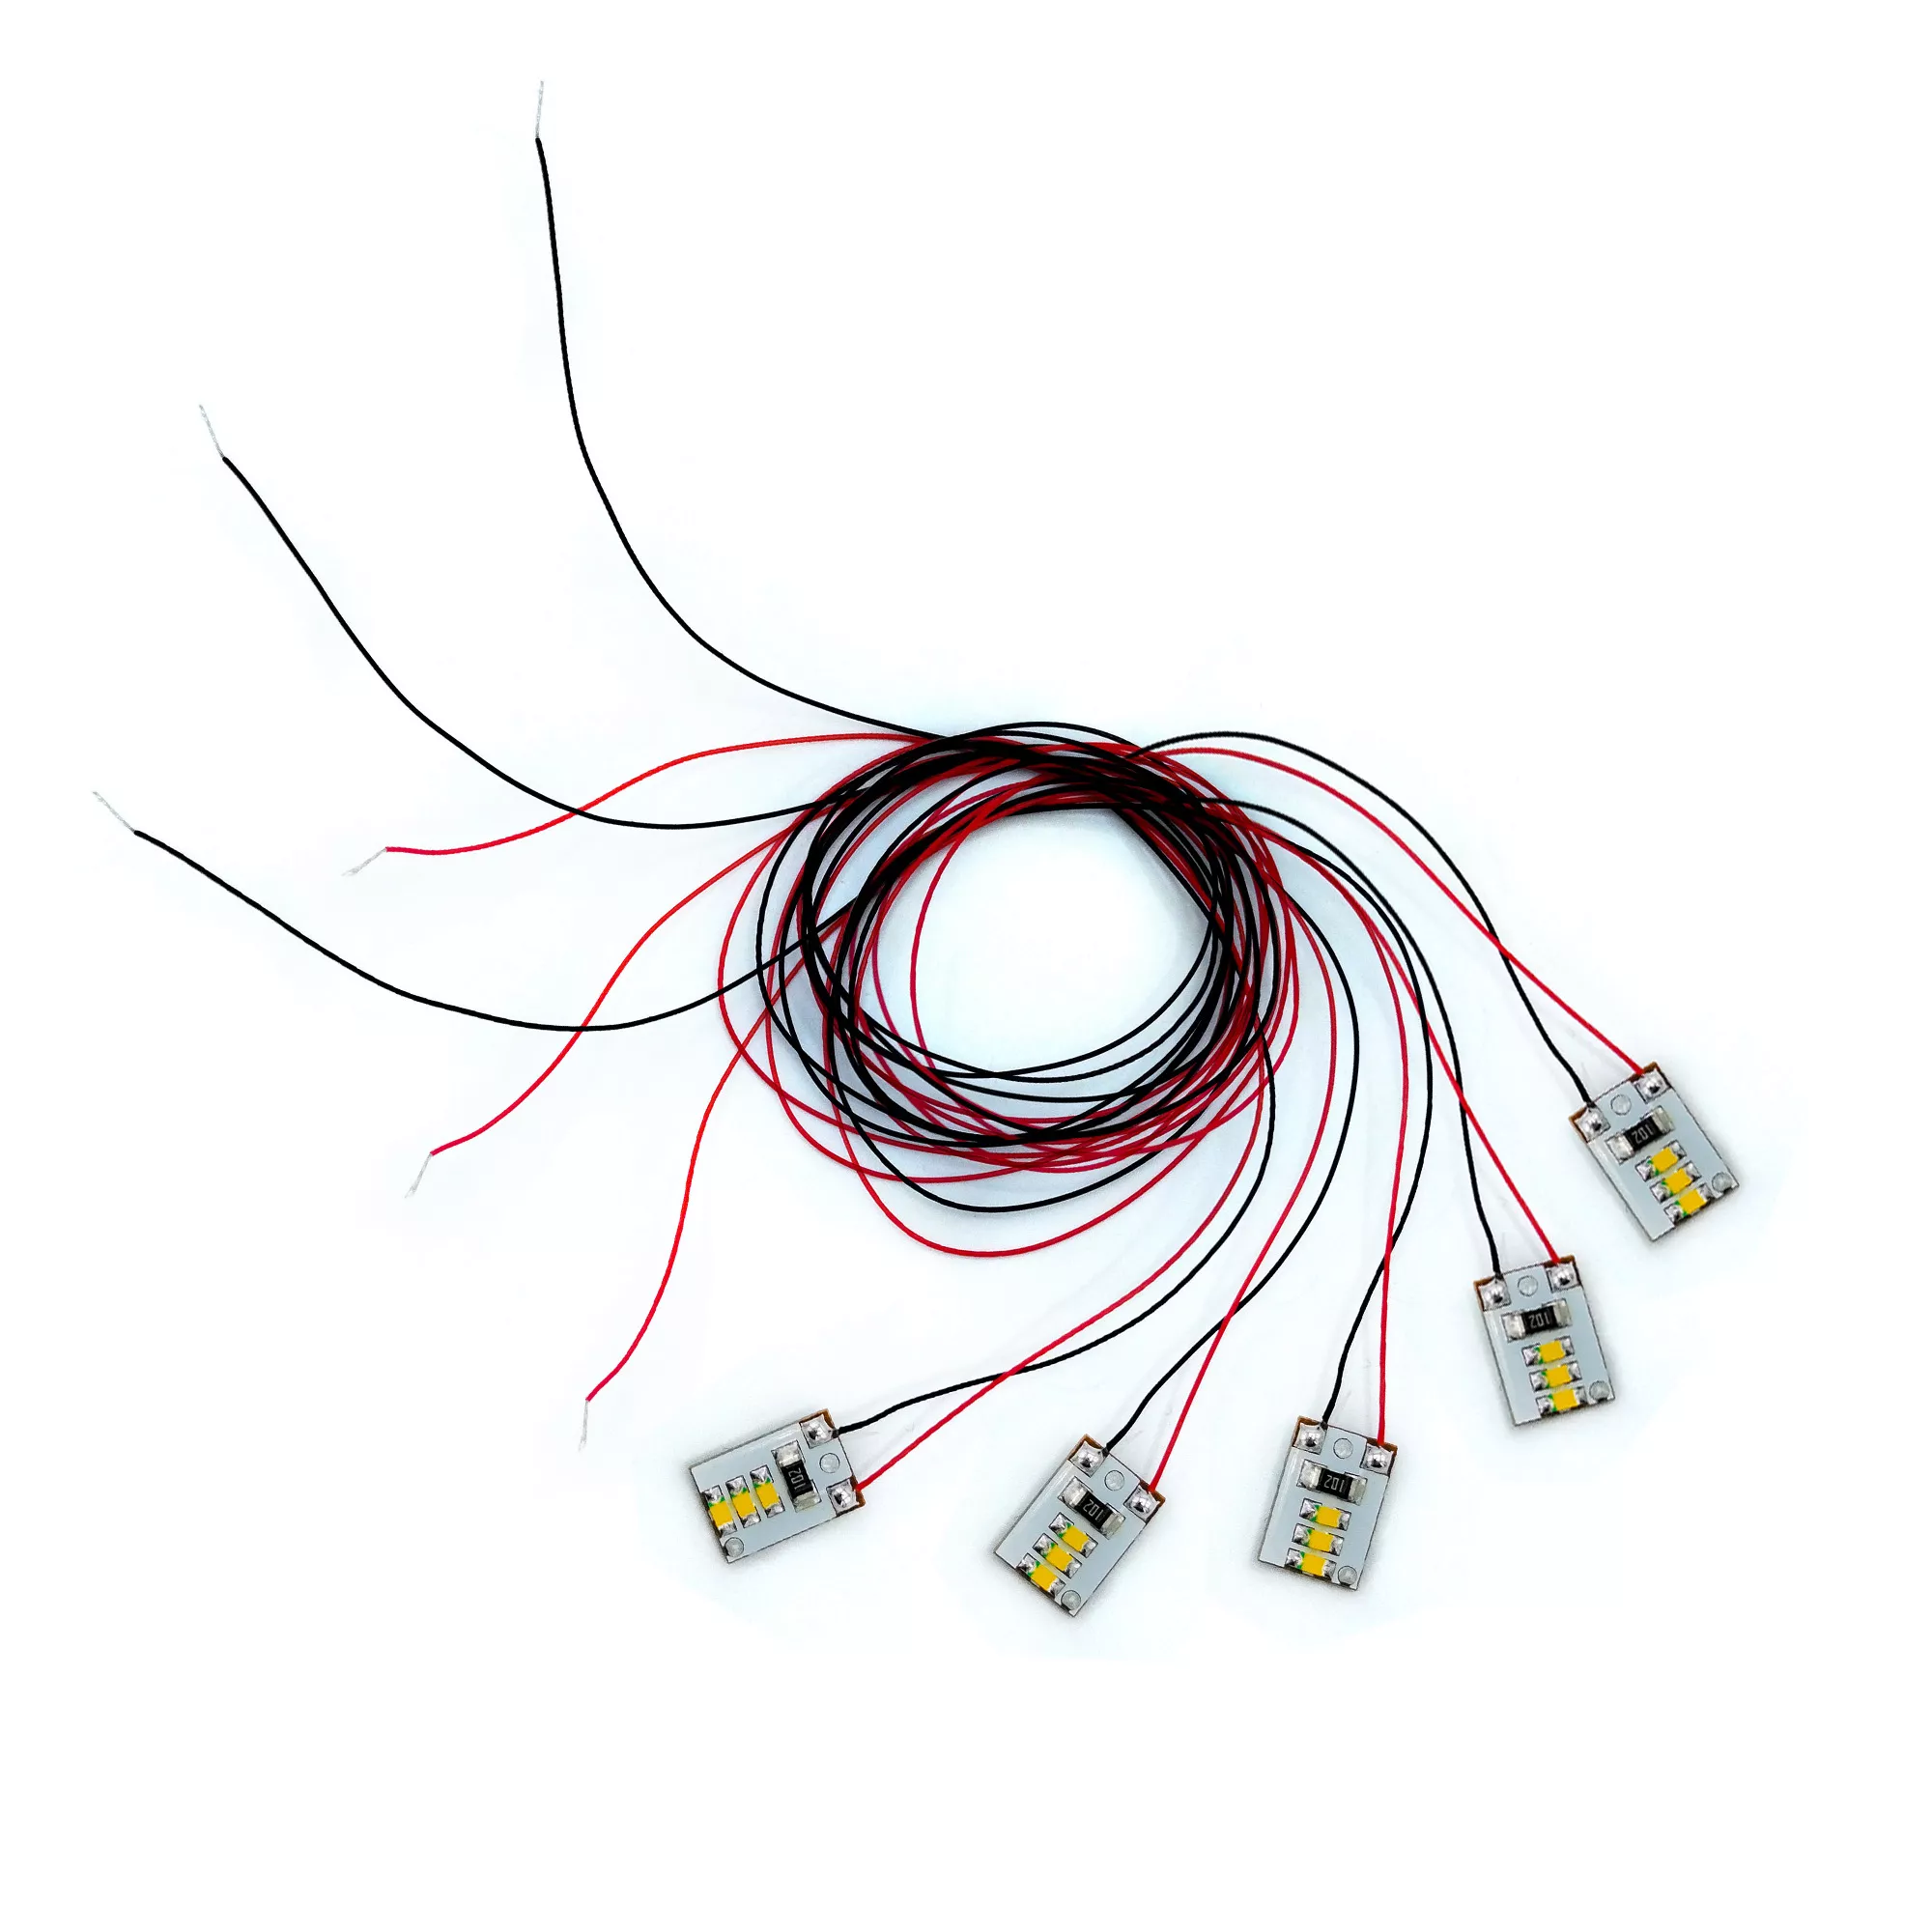 LED-Spot verkabelt mit 40cm Kabel,  Micron-Dynamics.de